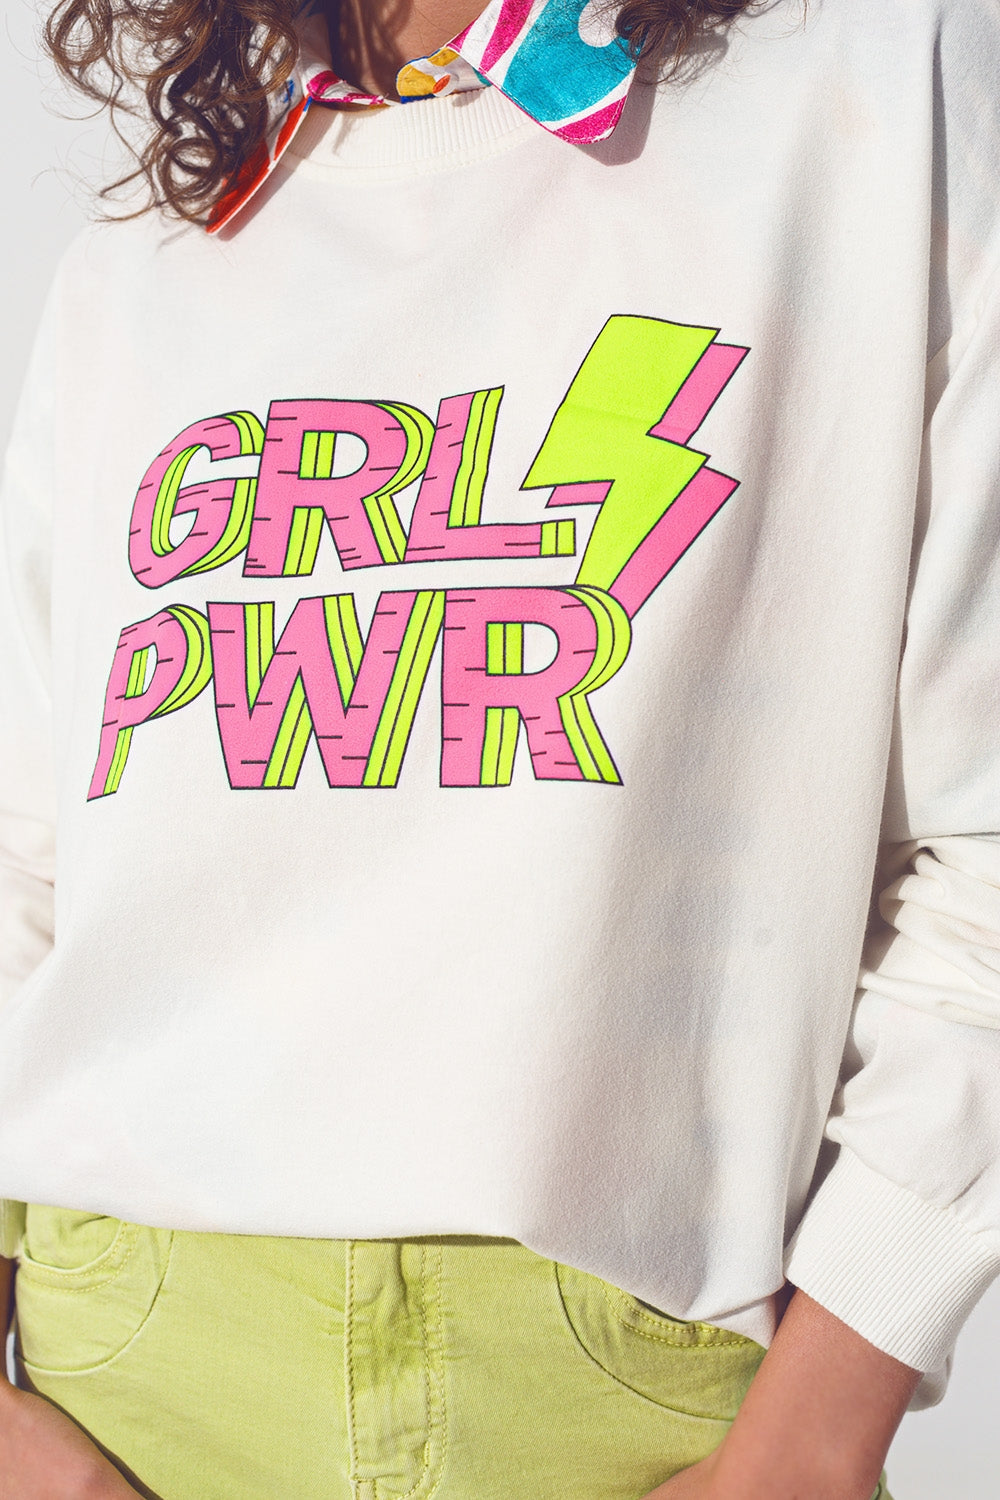 GRL PWR Text Sweatshirt in White